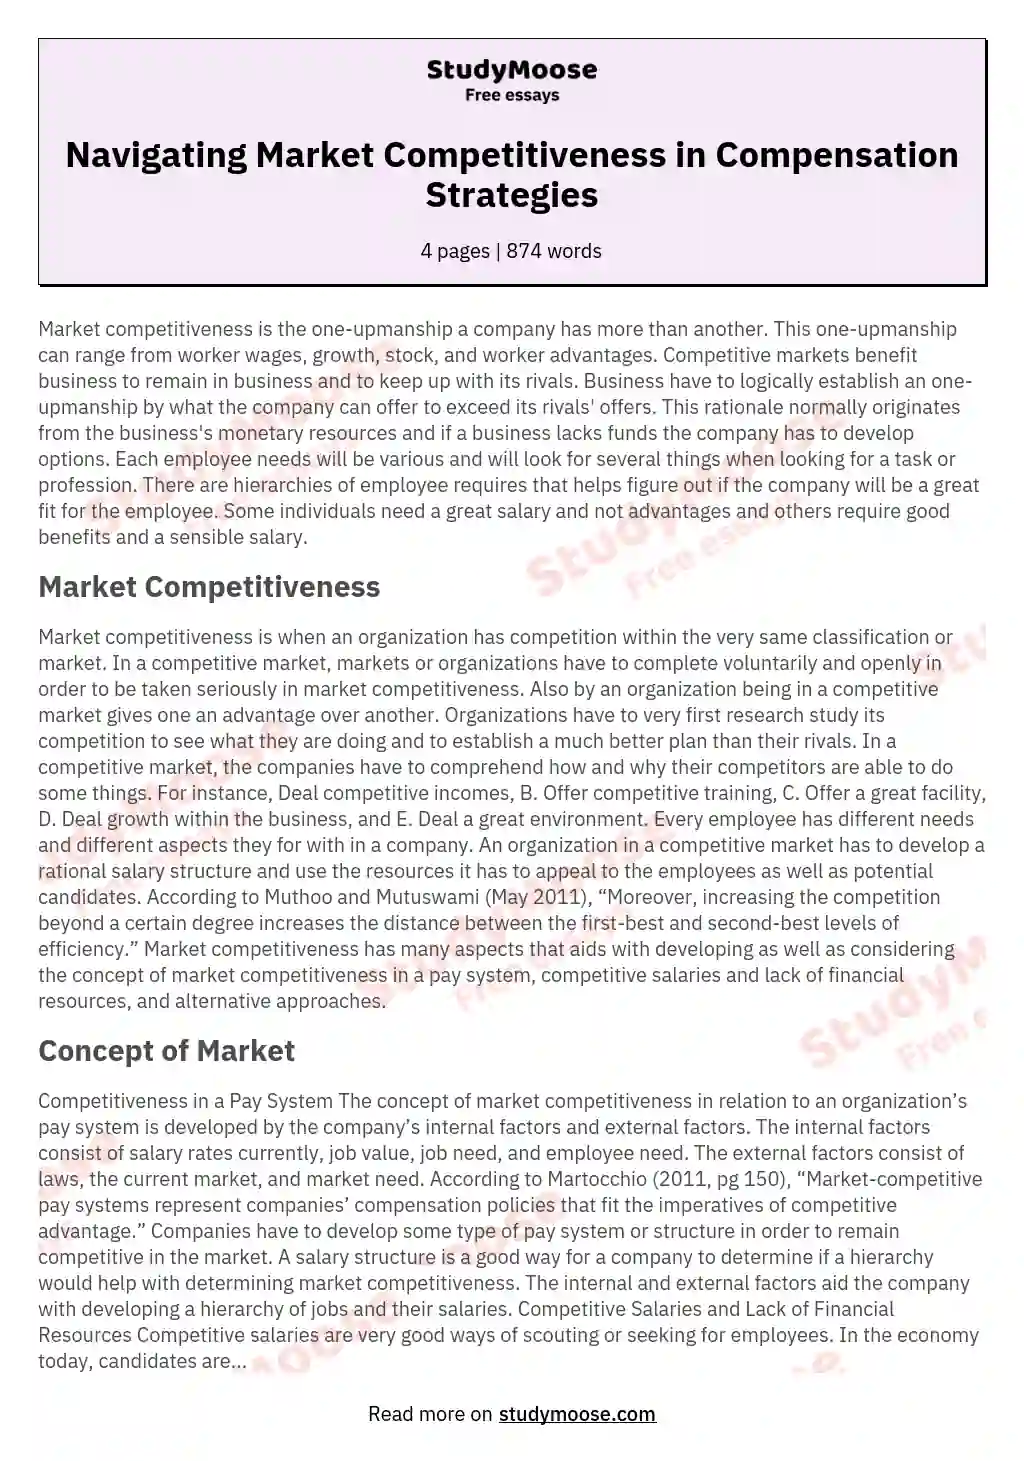 Navigating Market Competitiveness in Compensation Strategies essay